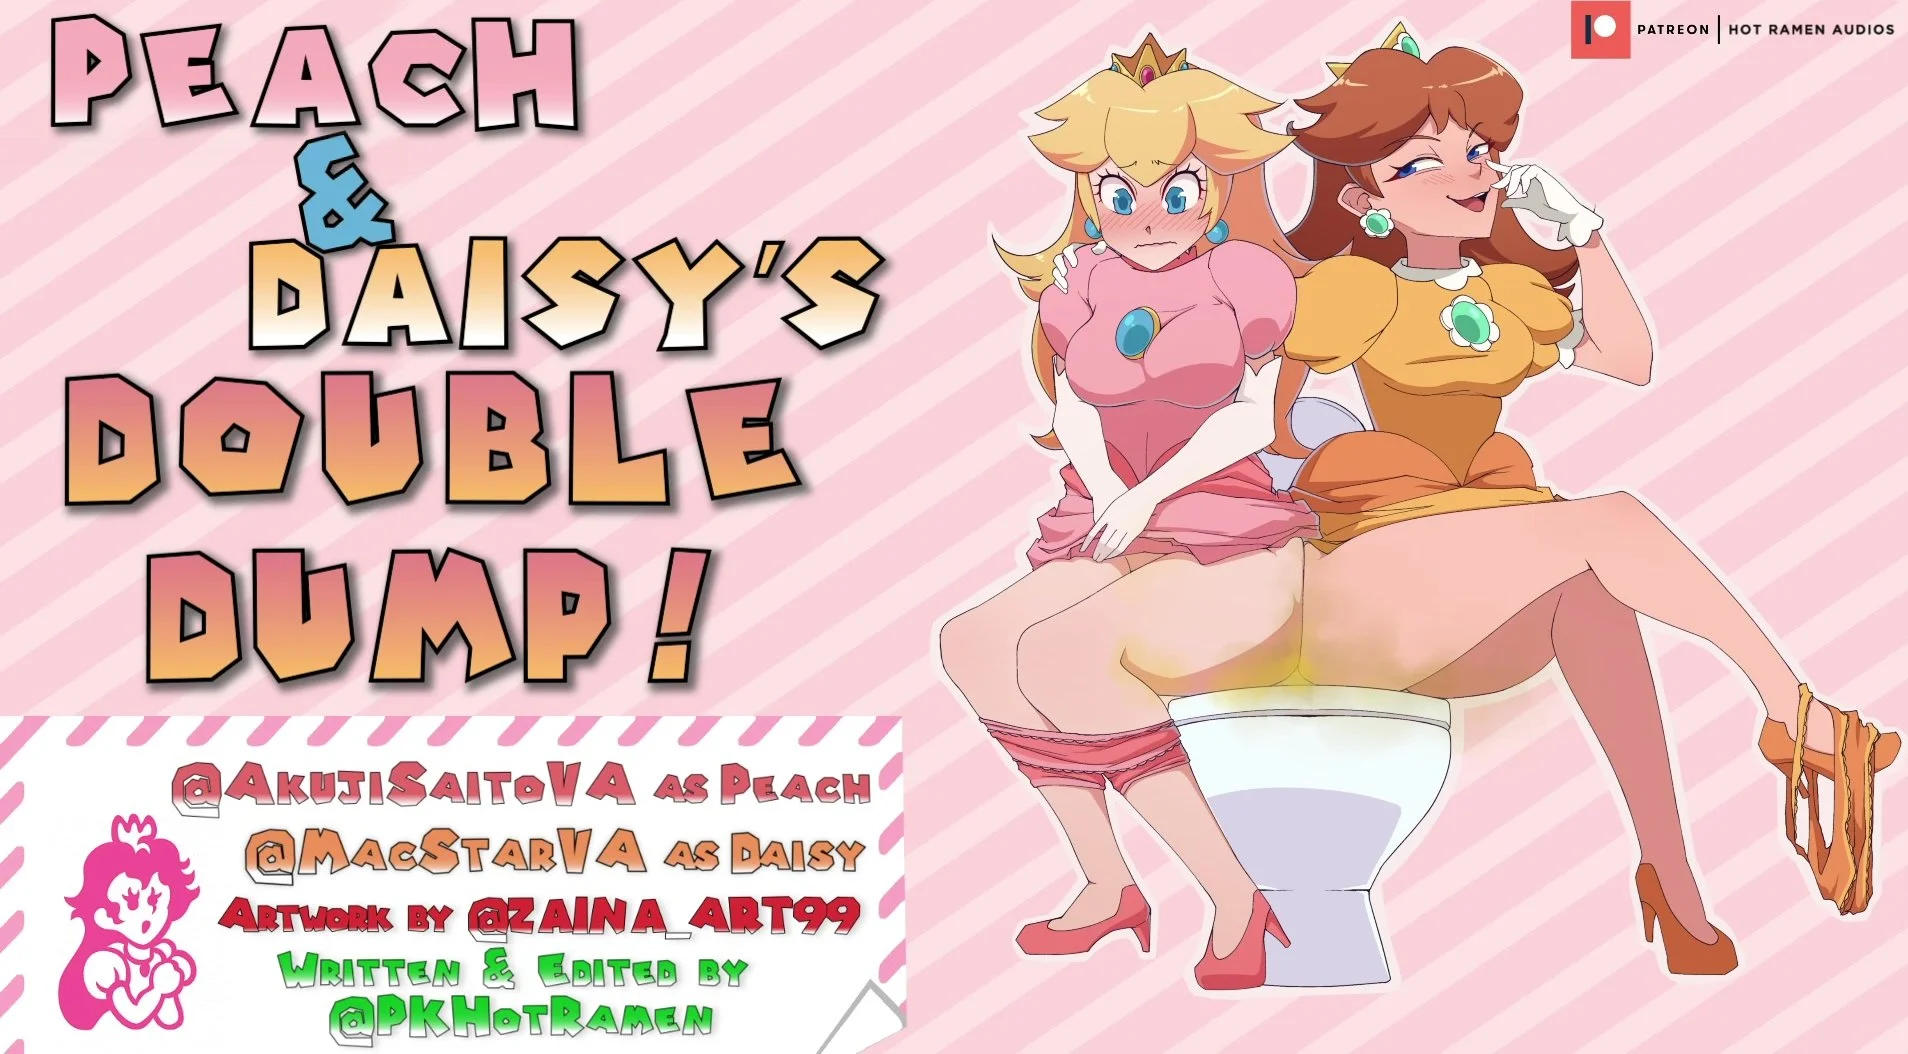 Peach & Daisy's Double Dump! (PKHotRamen) - ThisVid.com